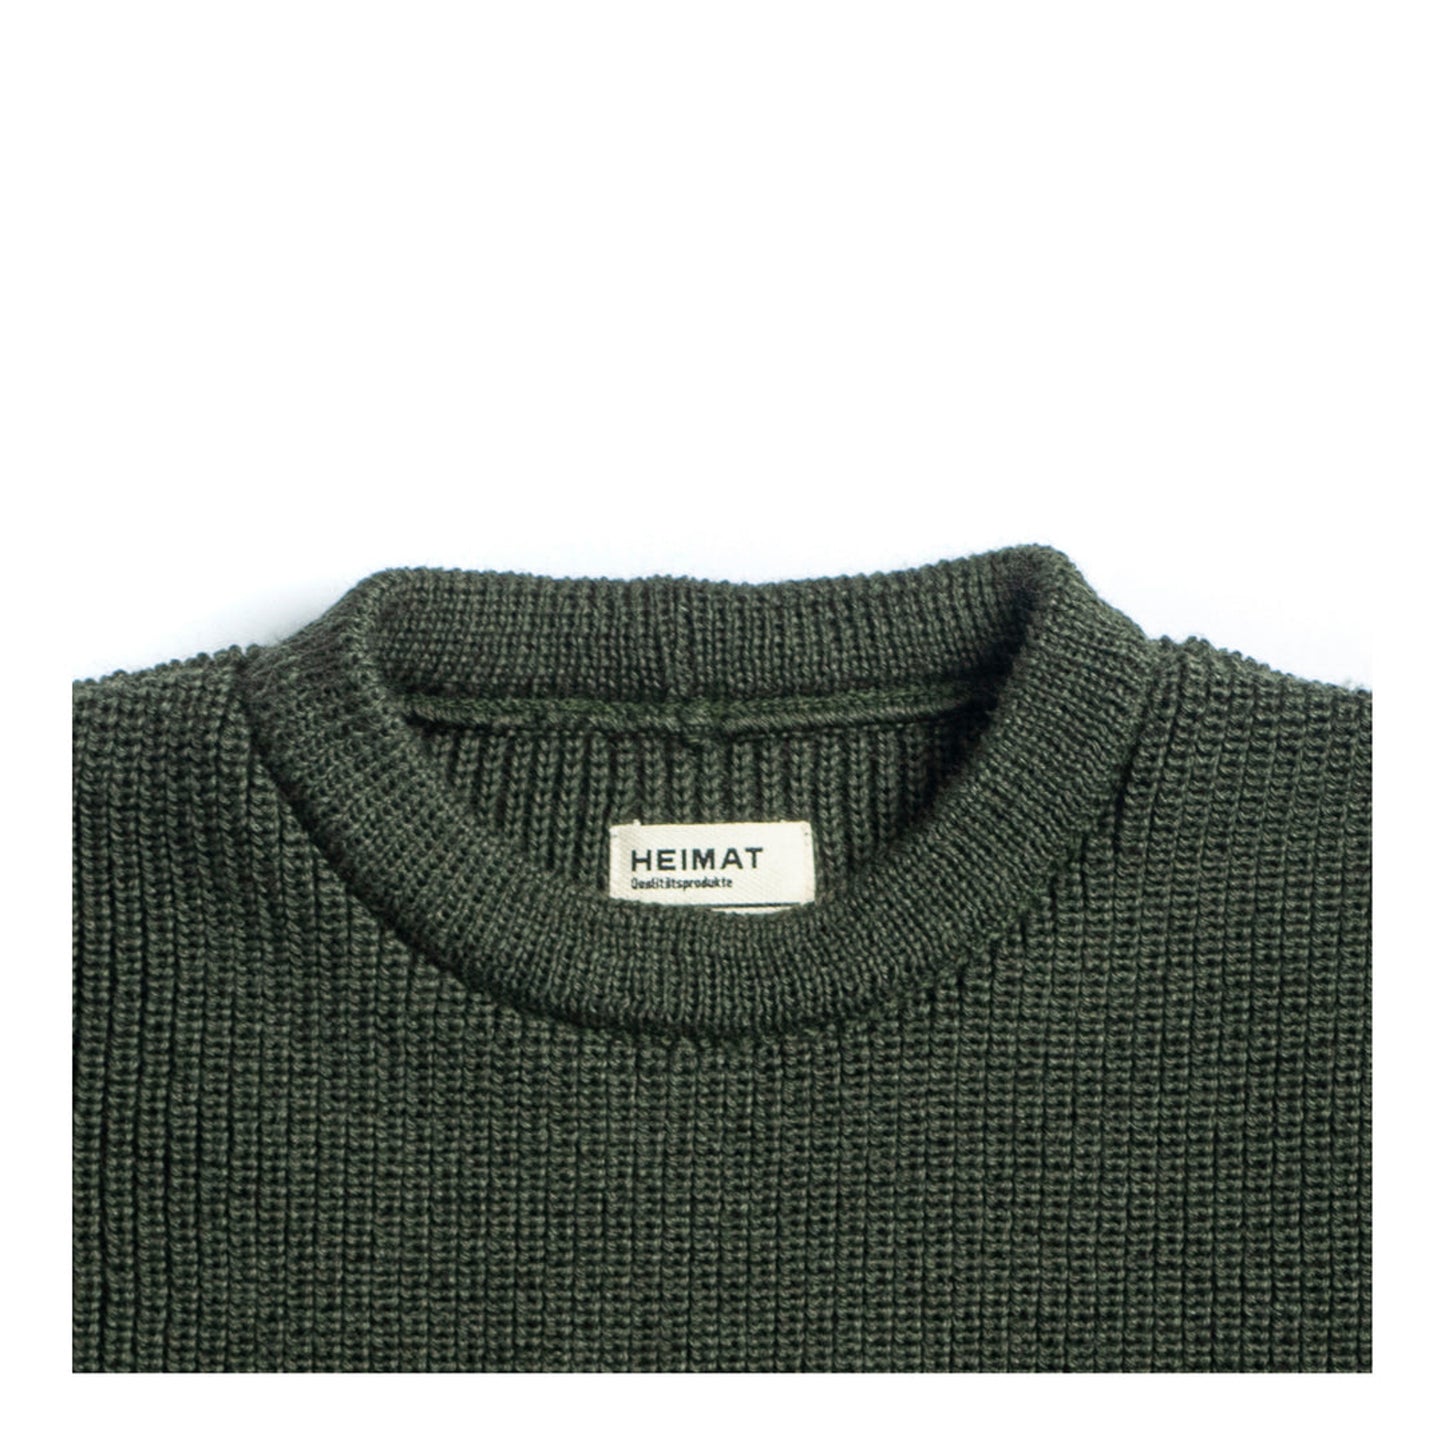 Rundhals Sweater Virgin Wool - Military Green